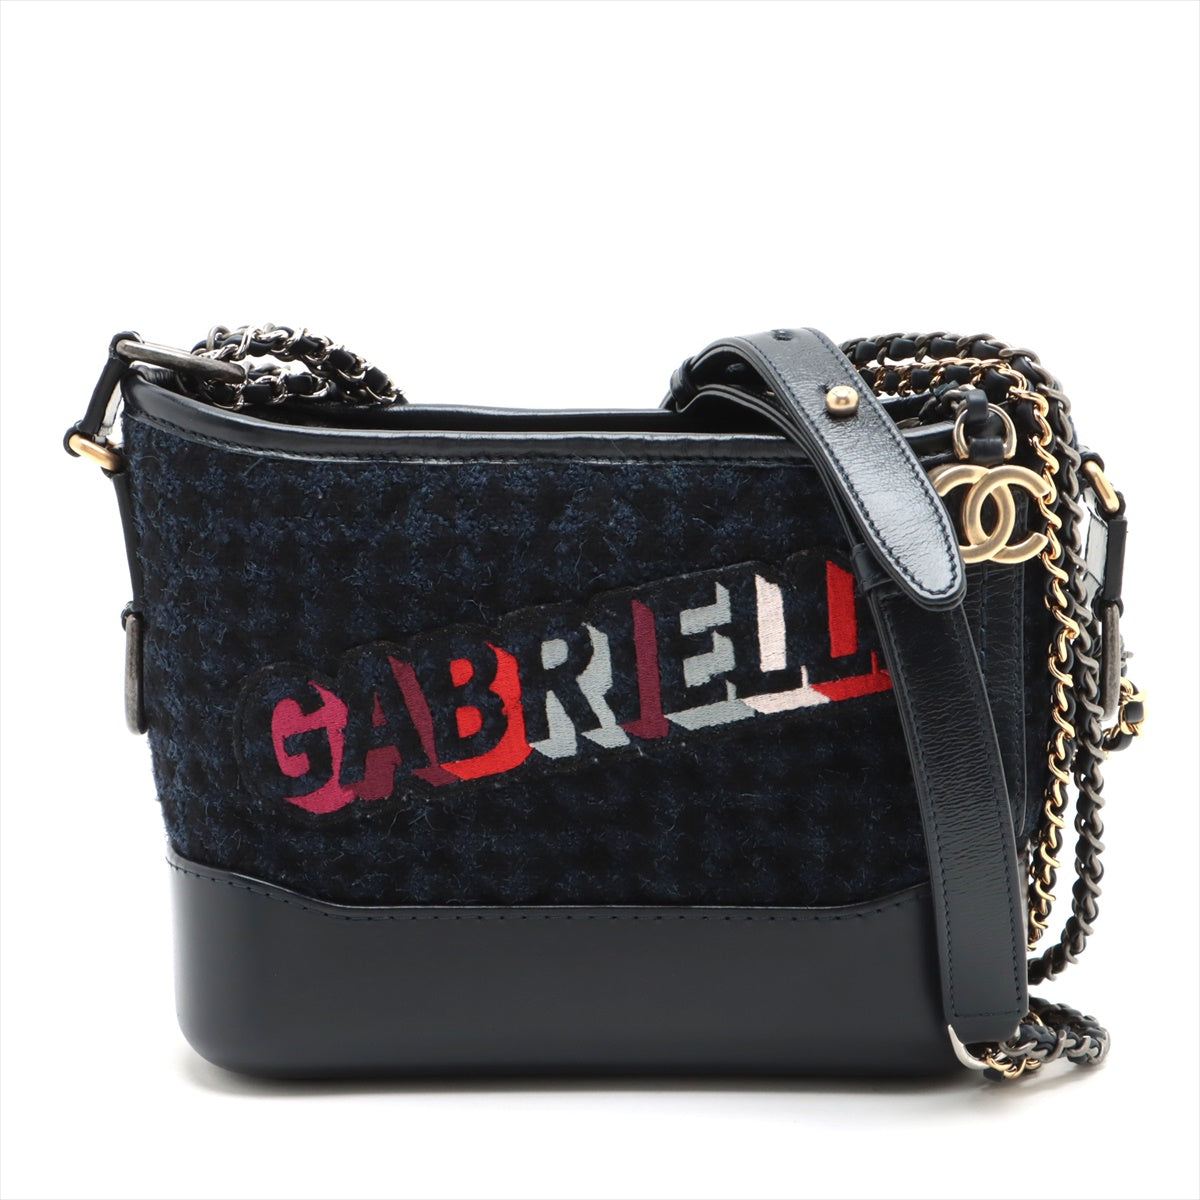 Chanel Gabrielle Doo Chanel Tweed Chain shoulder bag Navy blue Gold x silver metal fittings 24XXXXXX